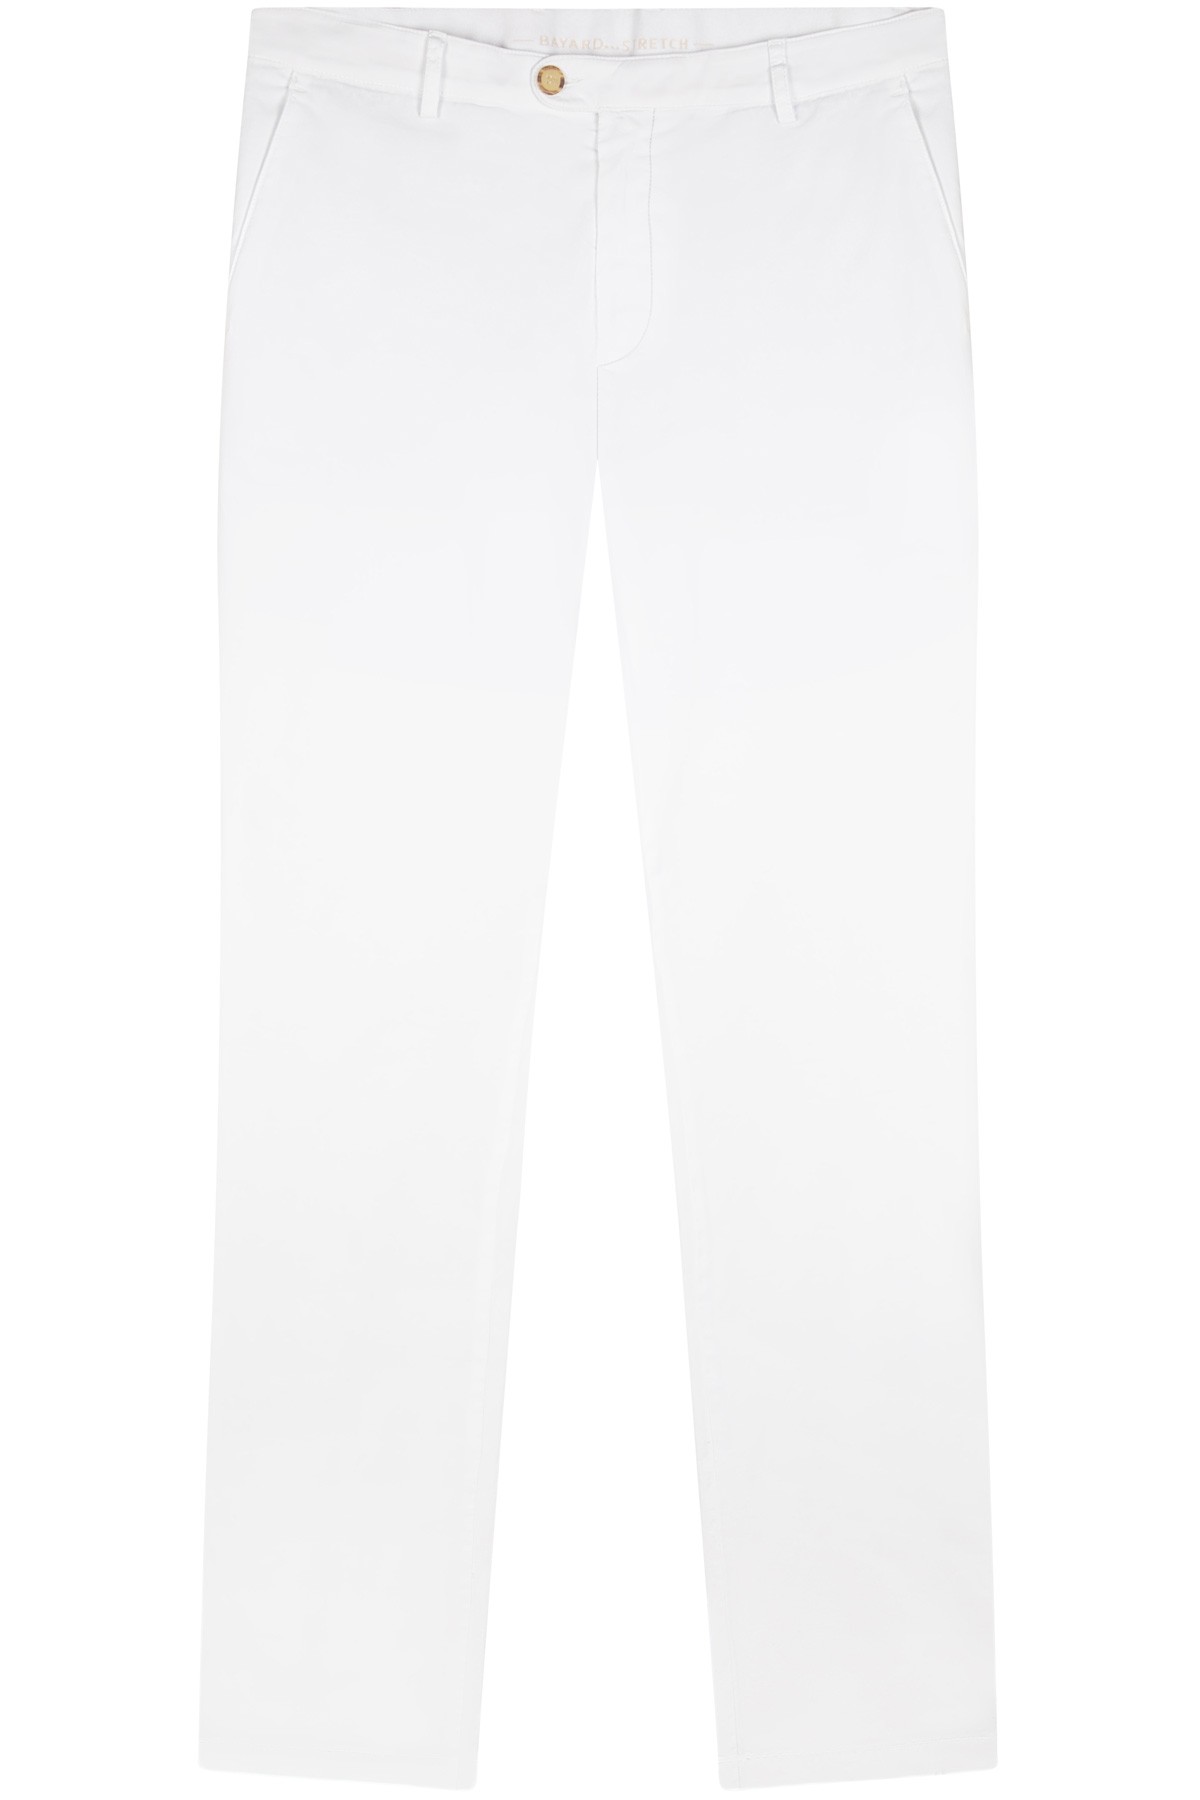 Chino en coton blanc stretch coupe slim poches italiennes